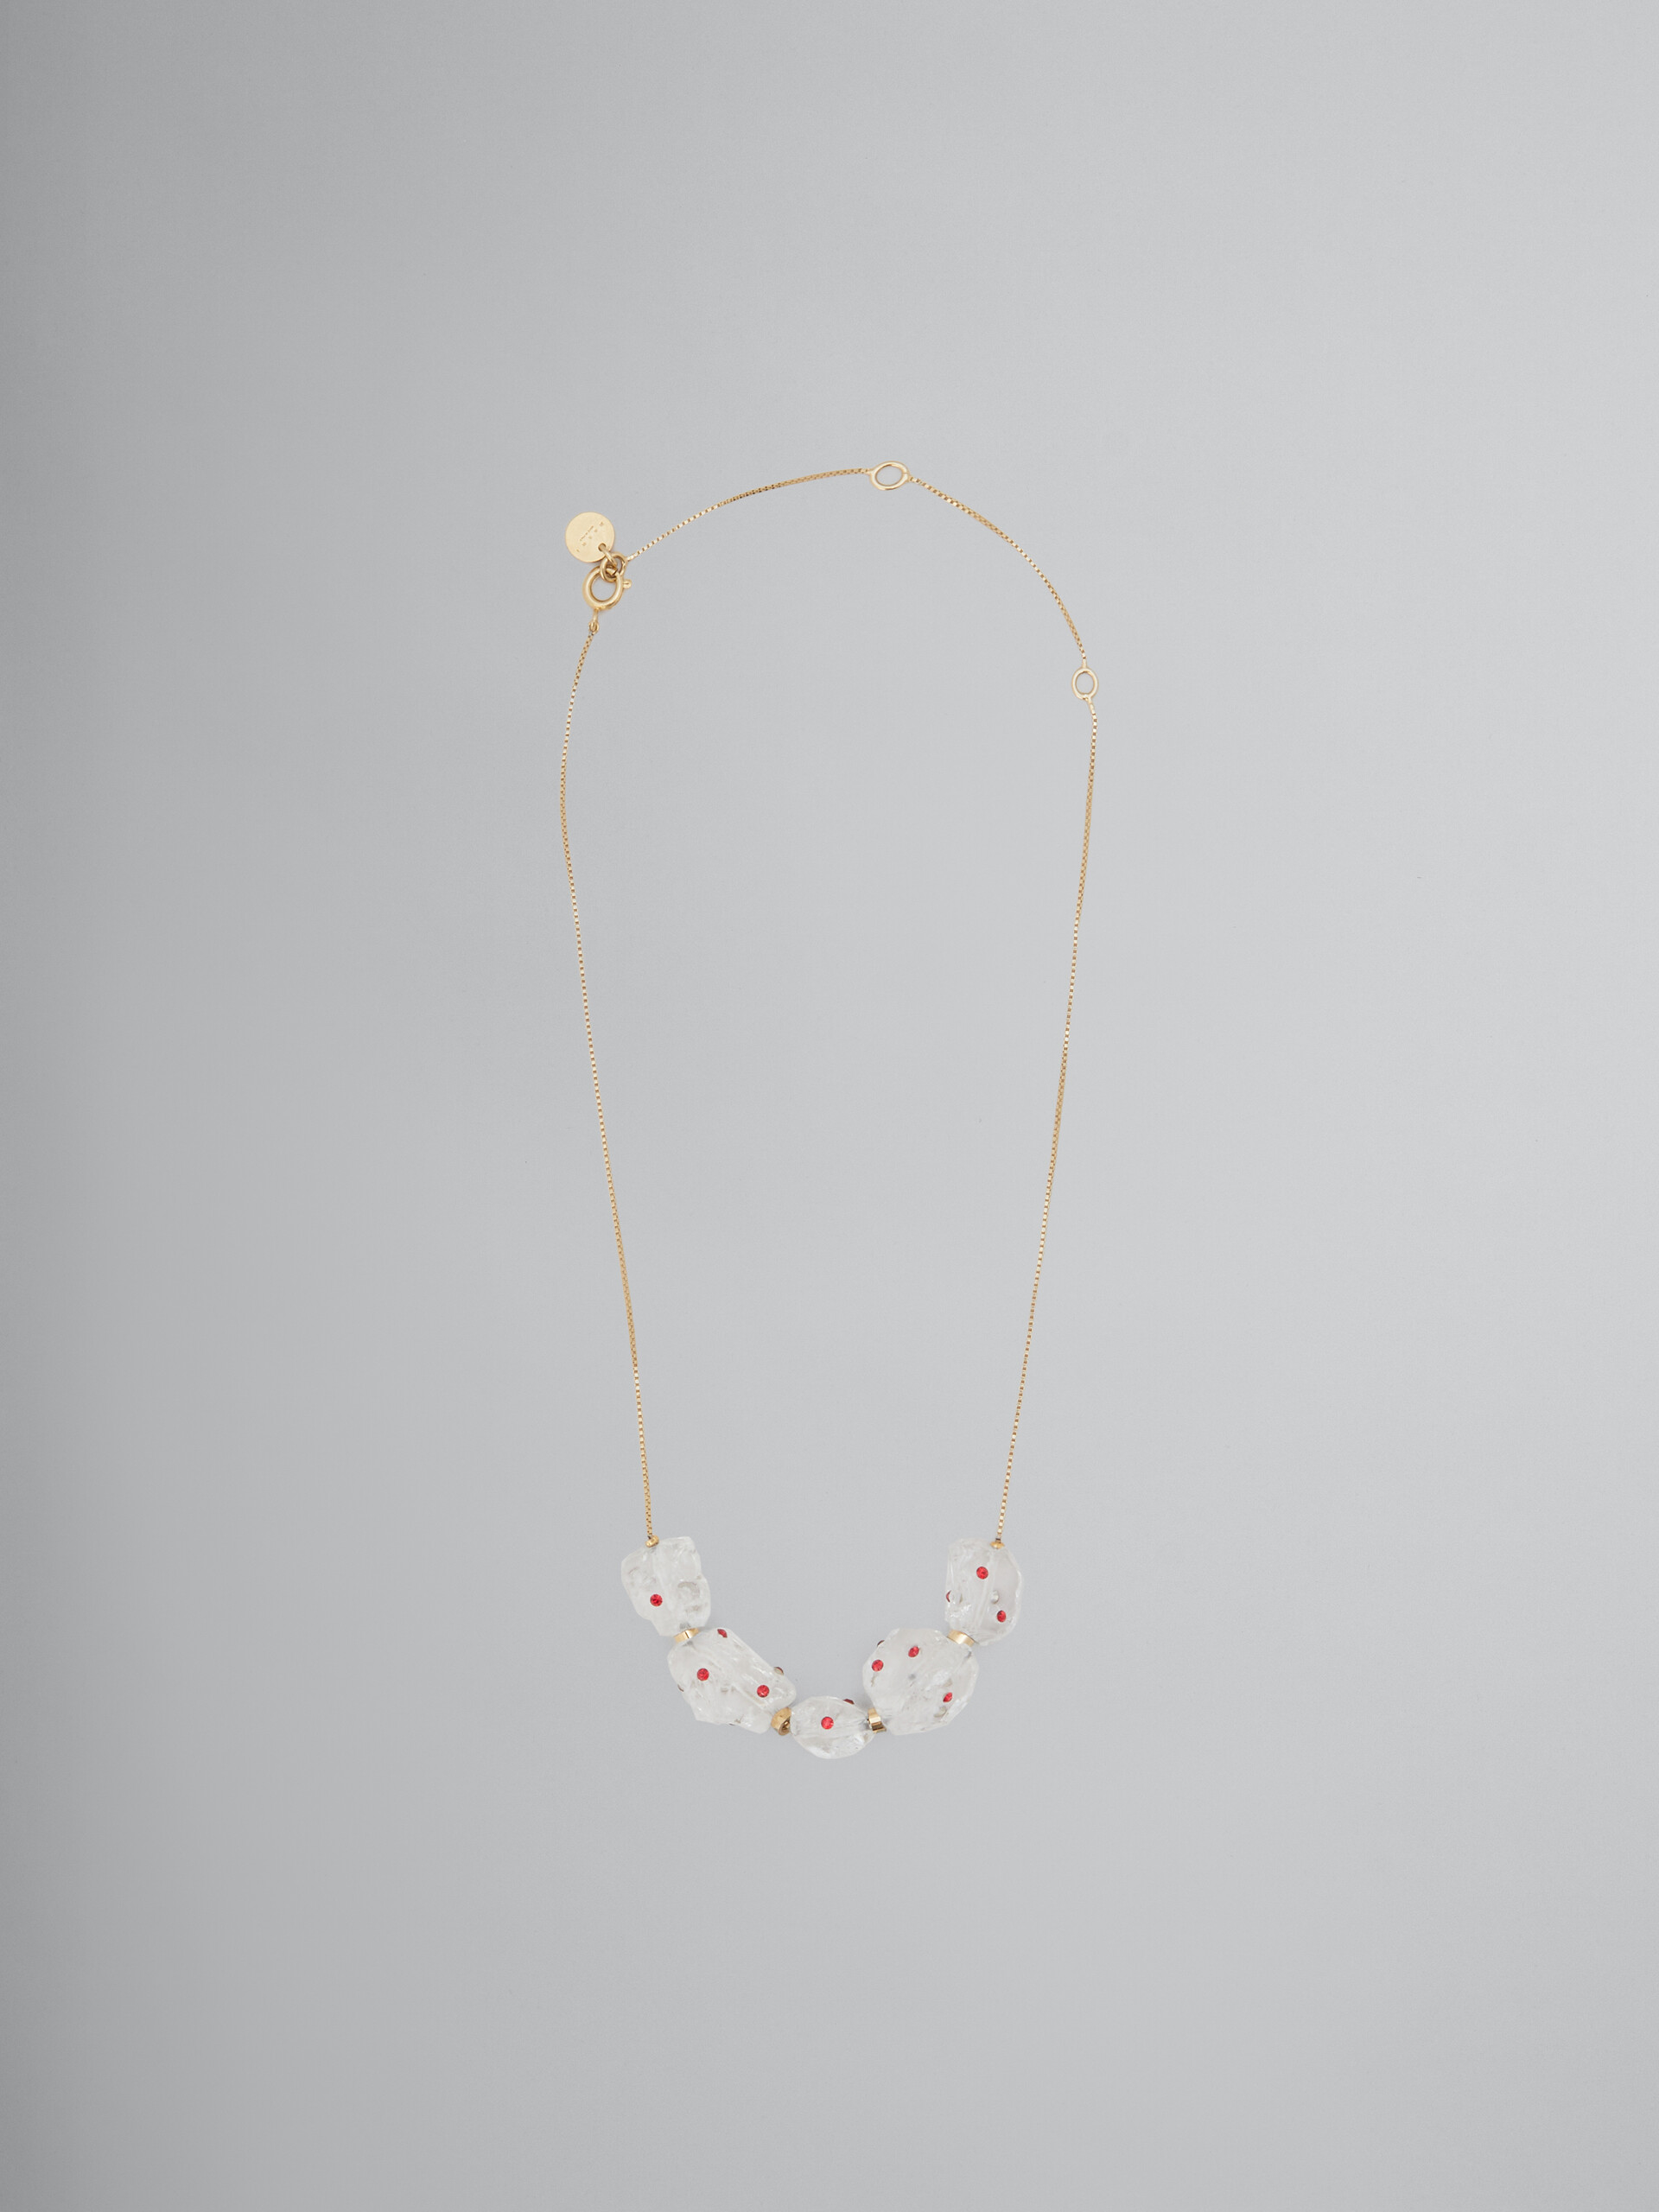 White quartz multi-stone necklace with rhinestone polka dots - Necklaces - Image 1